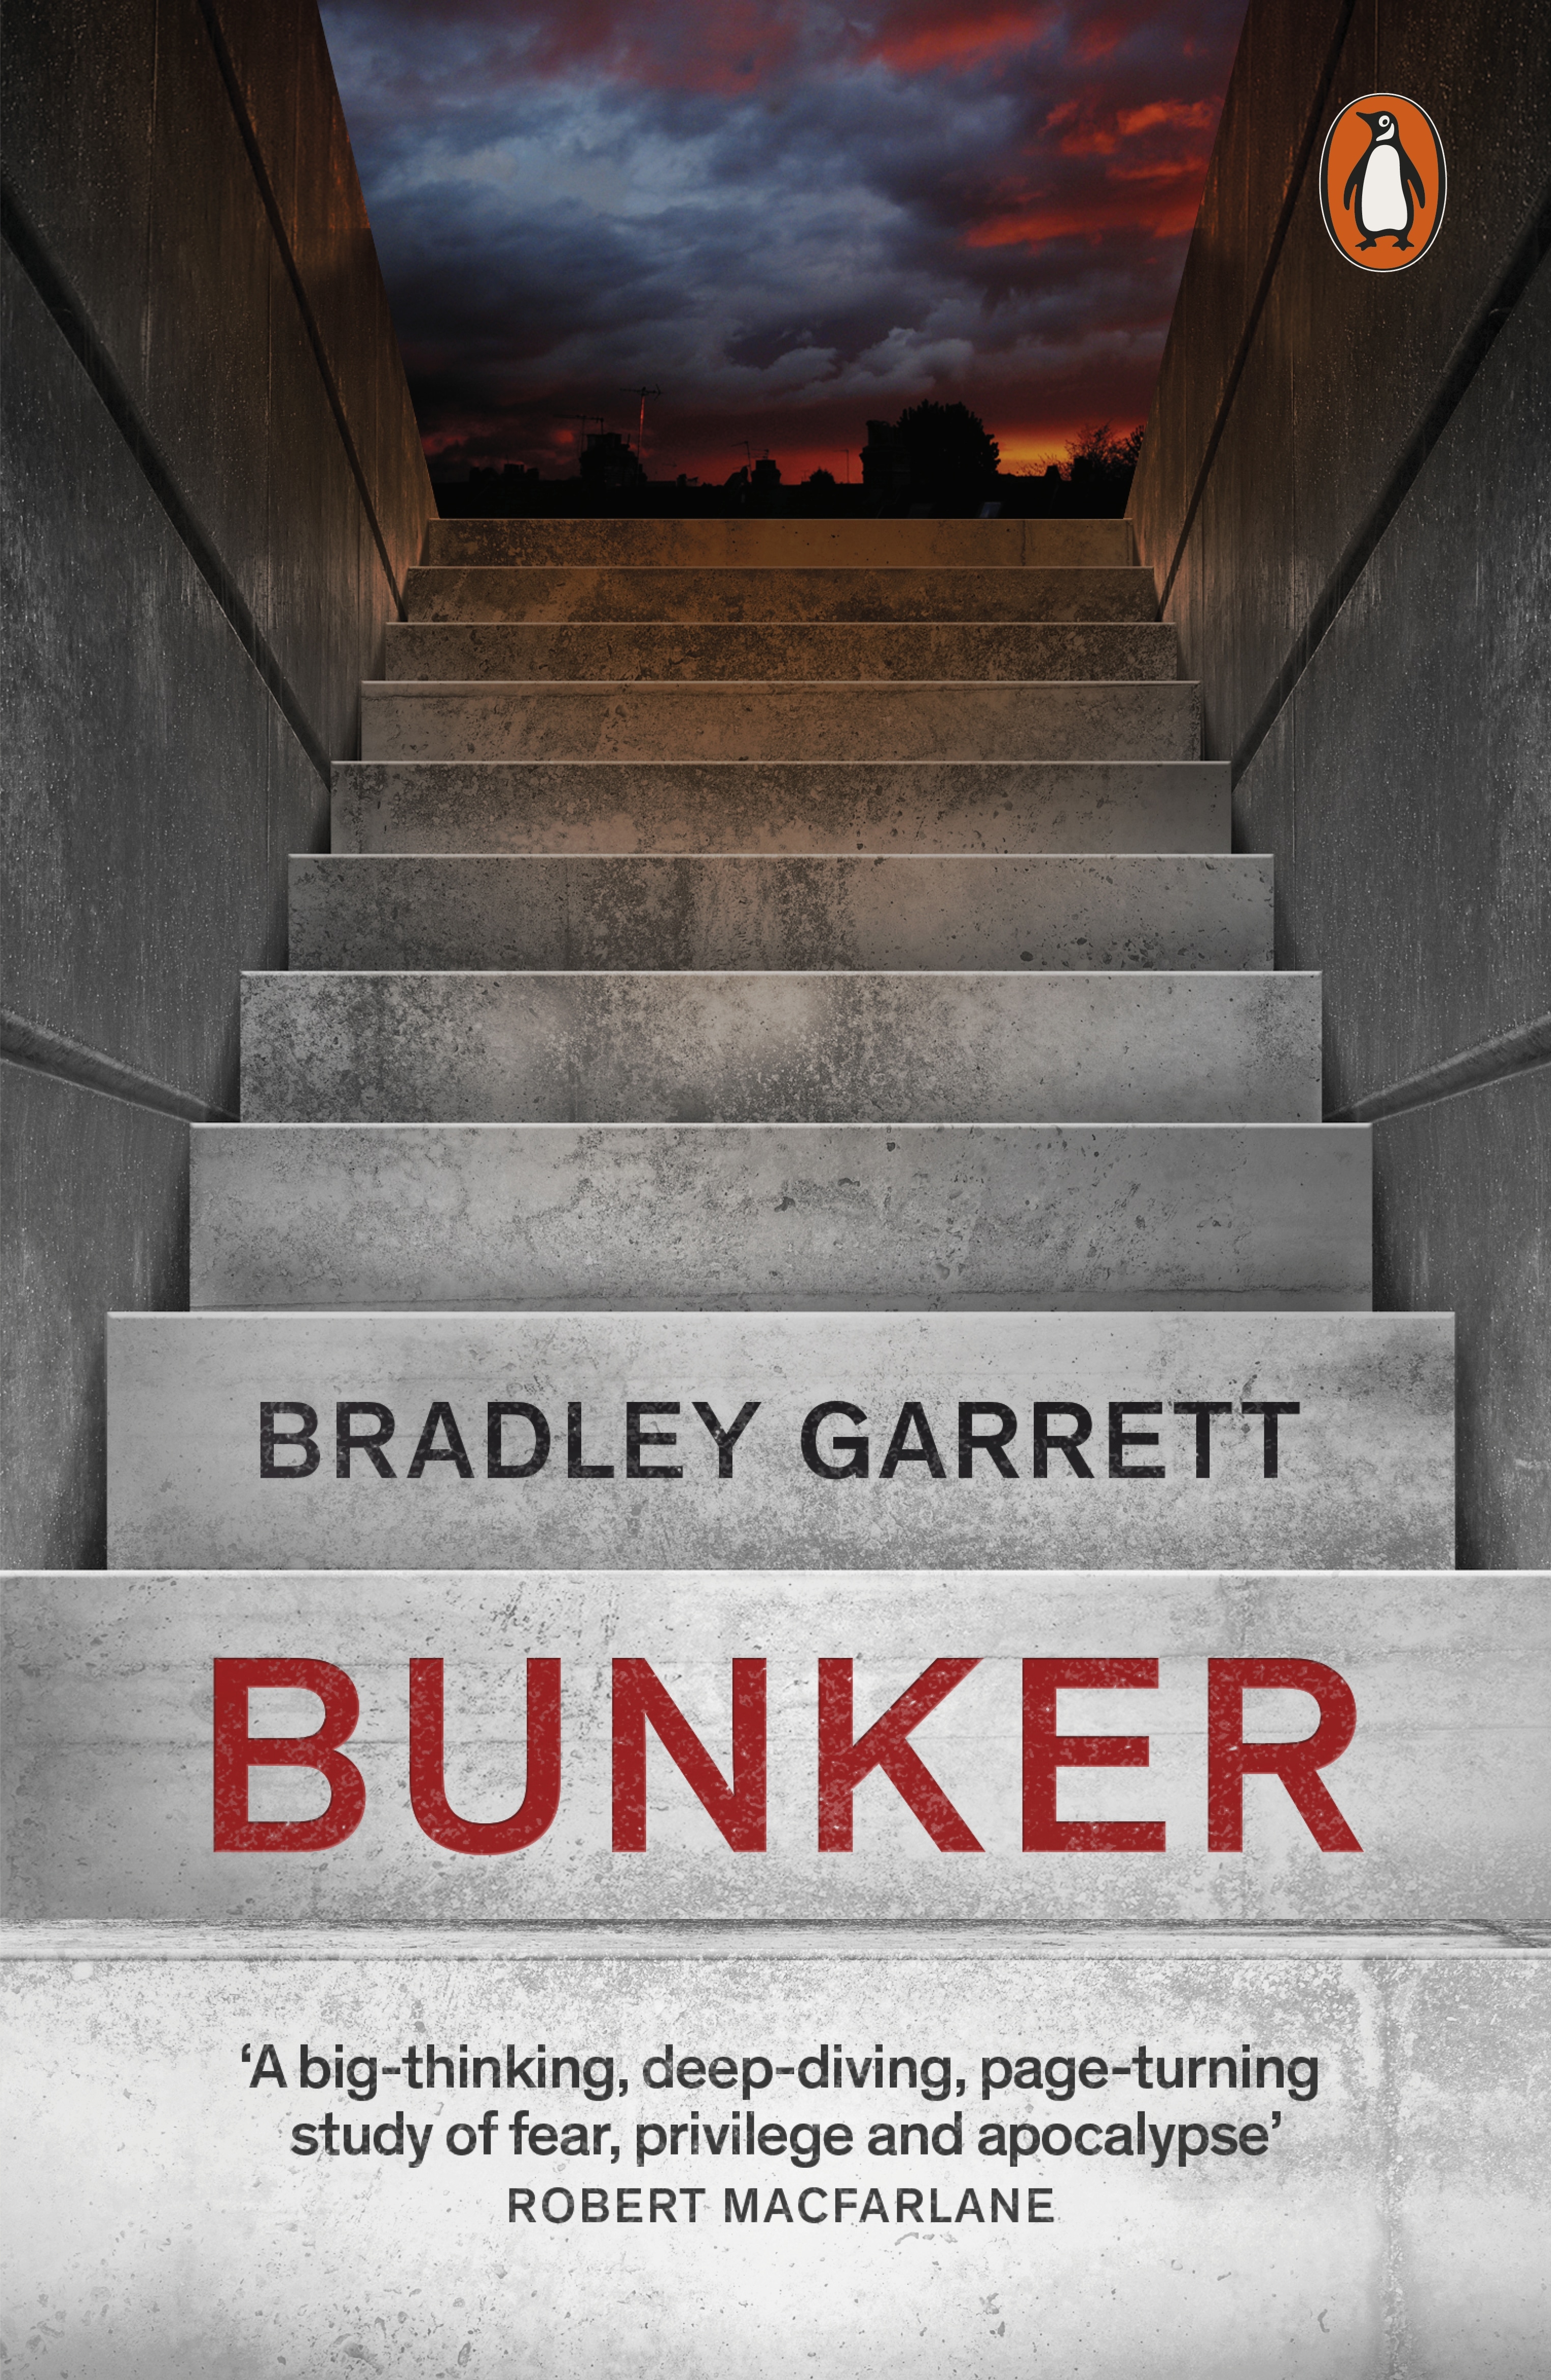 Book “Bunker” by Bradley Garrett — August 5, 2021